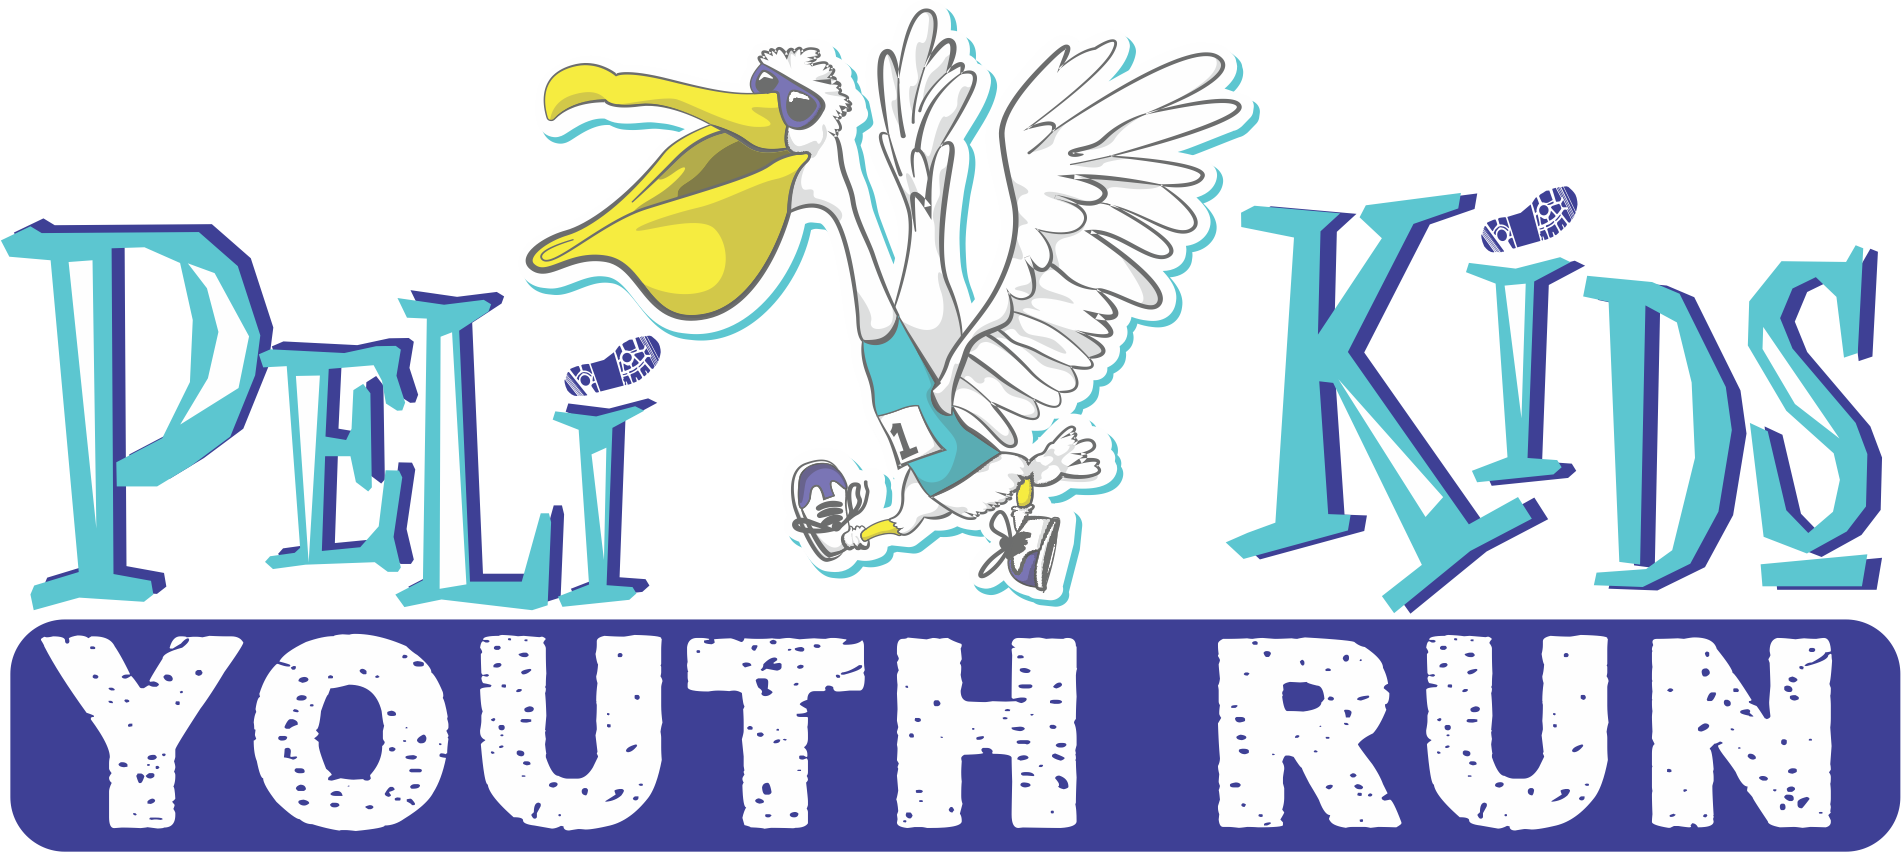 Pelikids Youth Run logo